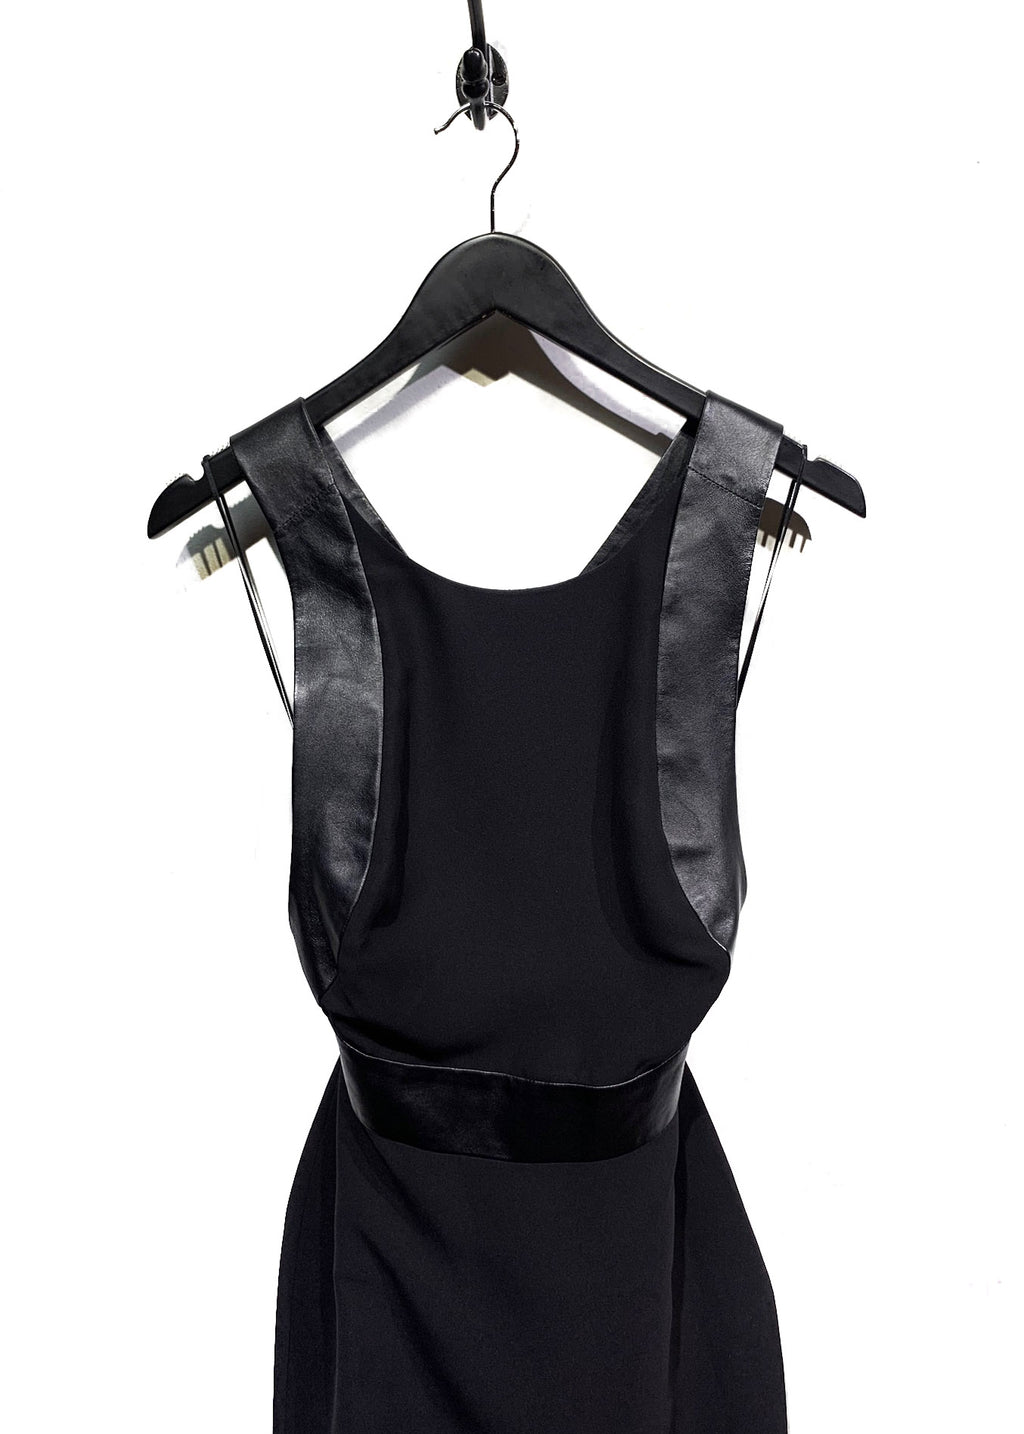 Gucci Black Leather-Trimmed Criss Cross Dress